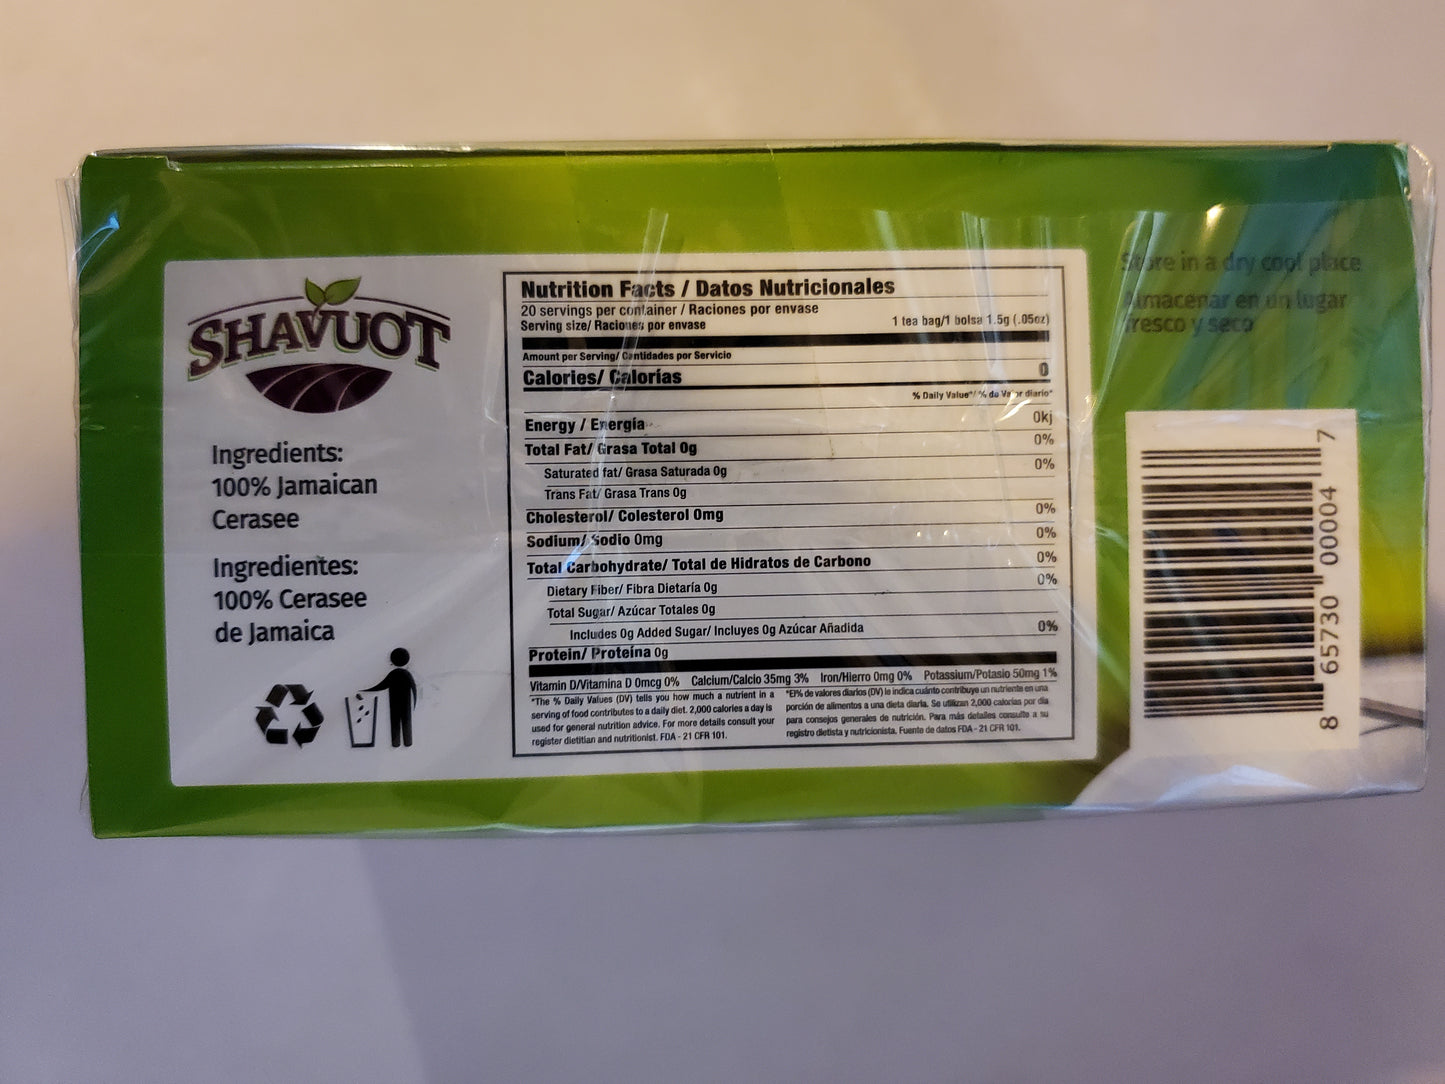 Shavuot Jamaican Cerasee Tea 20 Tea Bags (Pack 4)